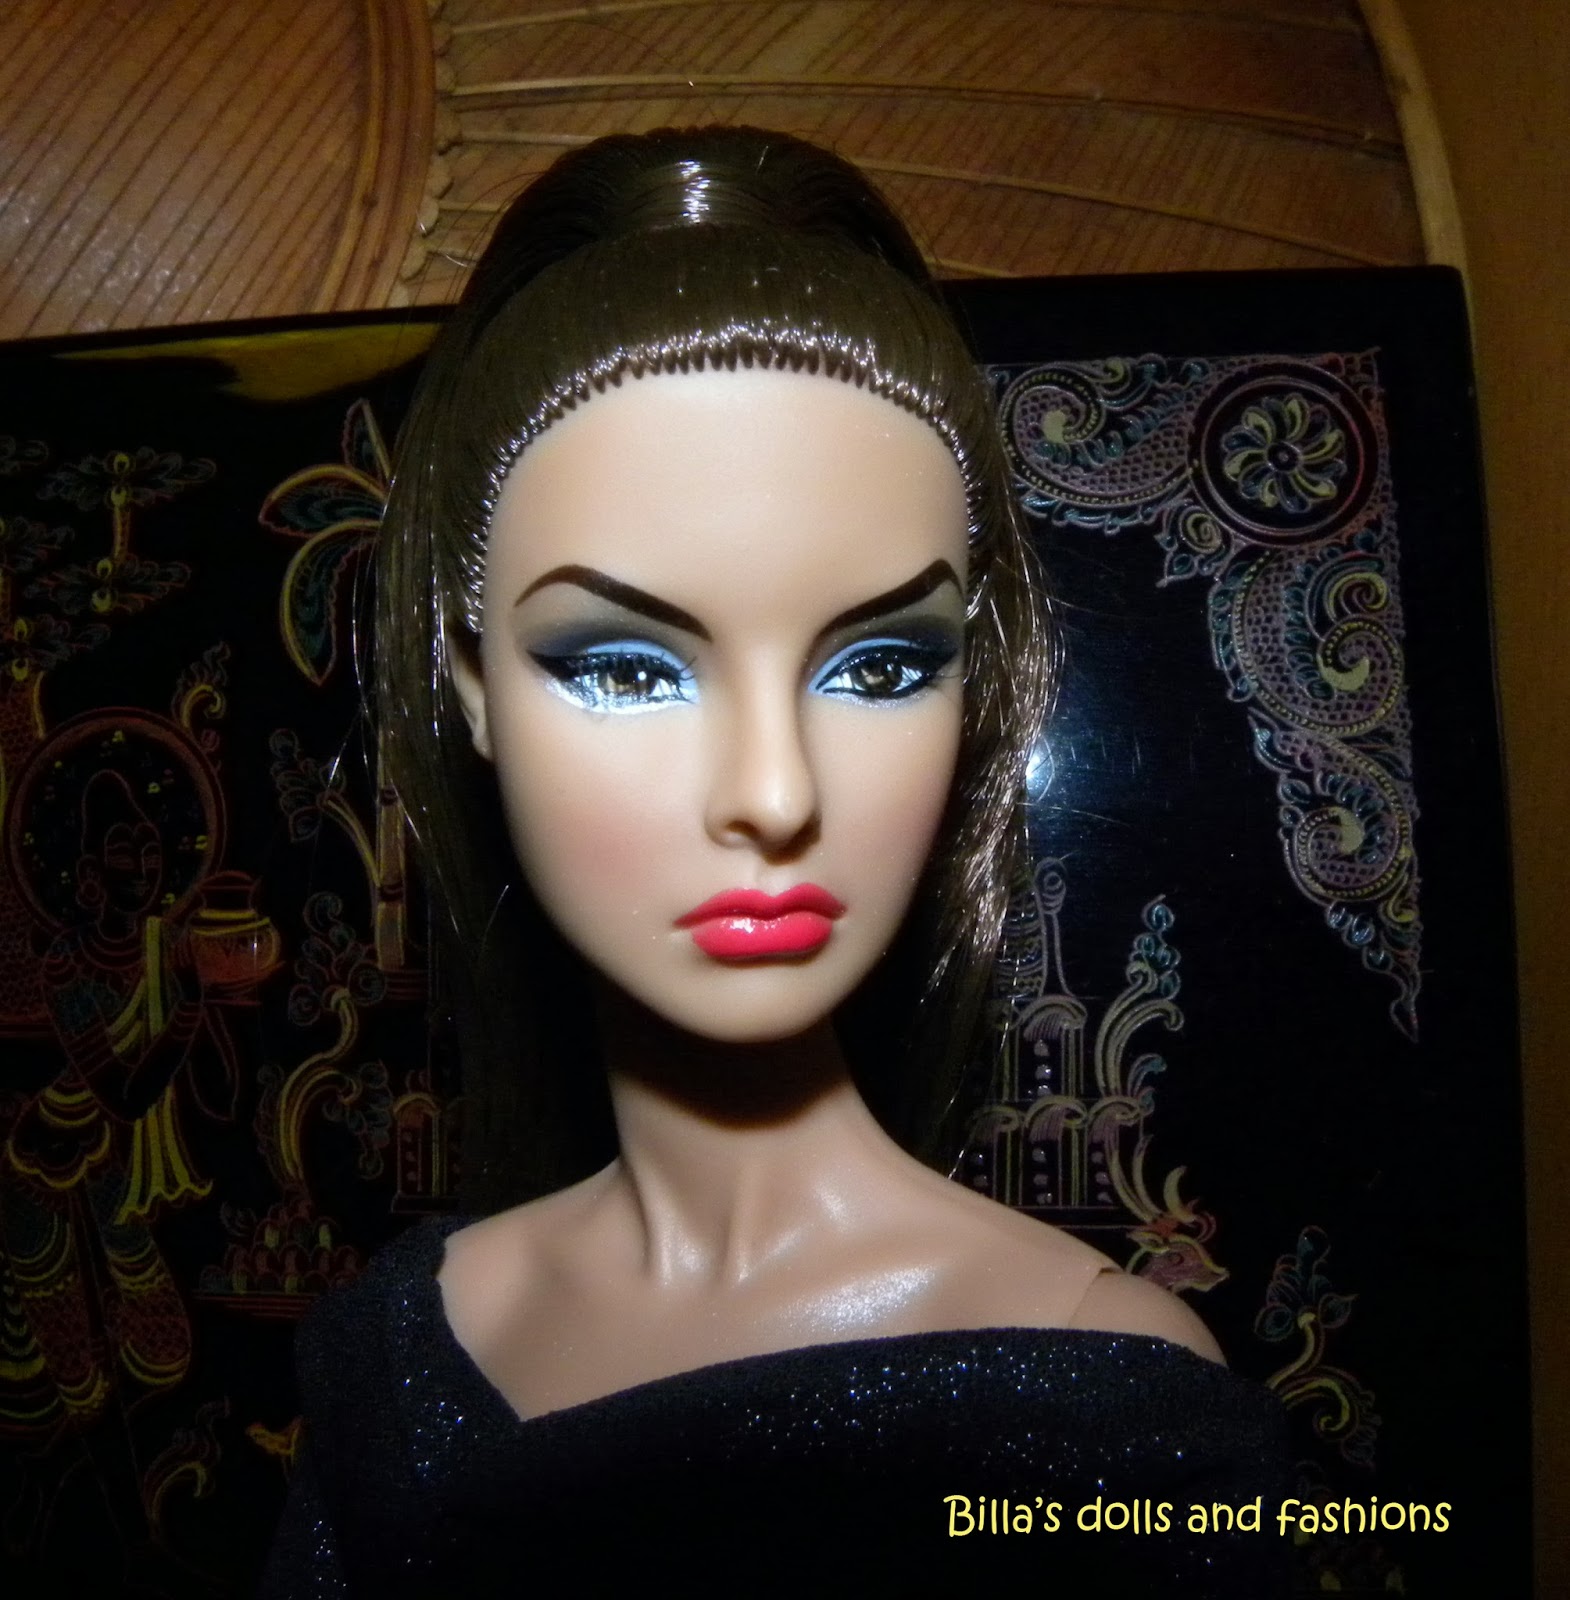 billa s dolls and fashions The Models